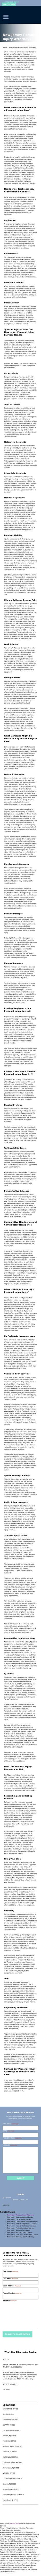 Legal Care - Newark NJ Lawyers